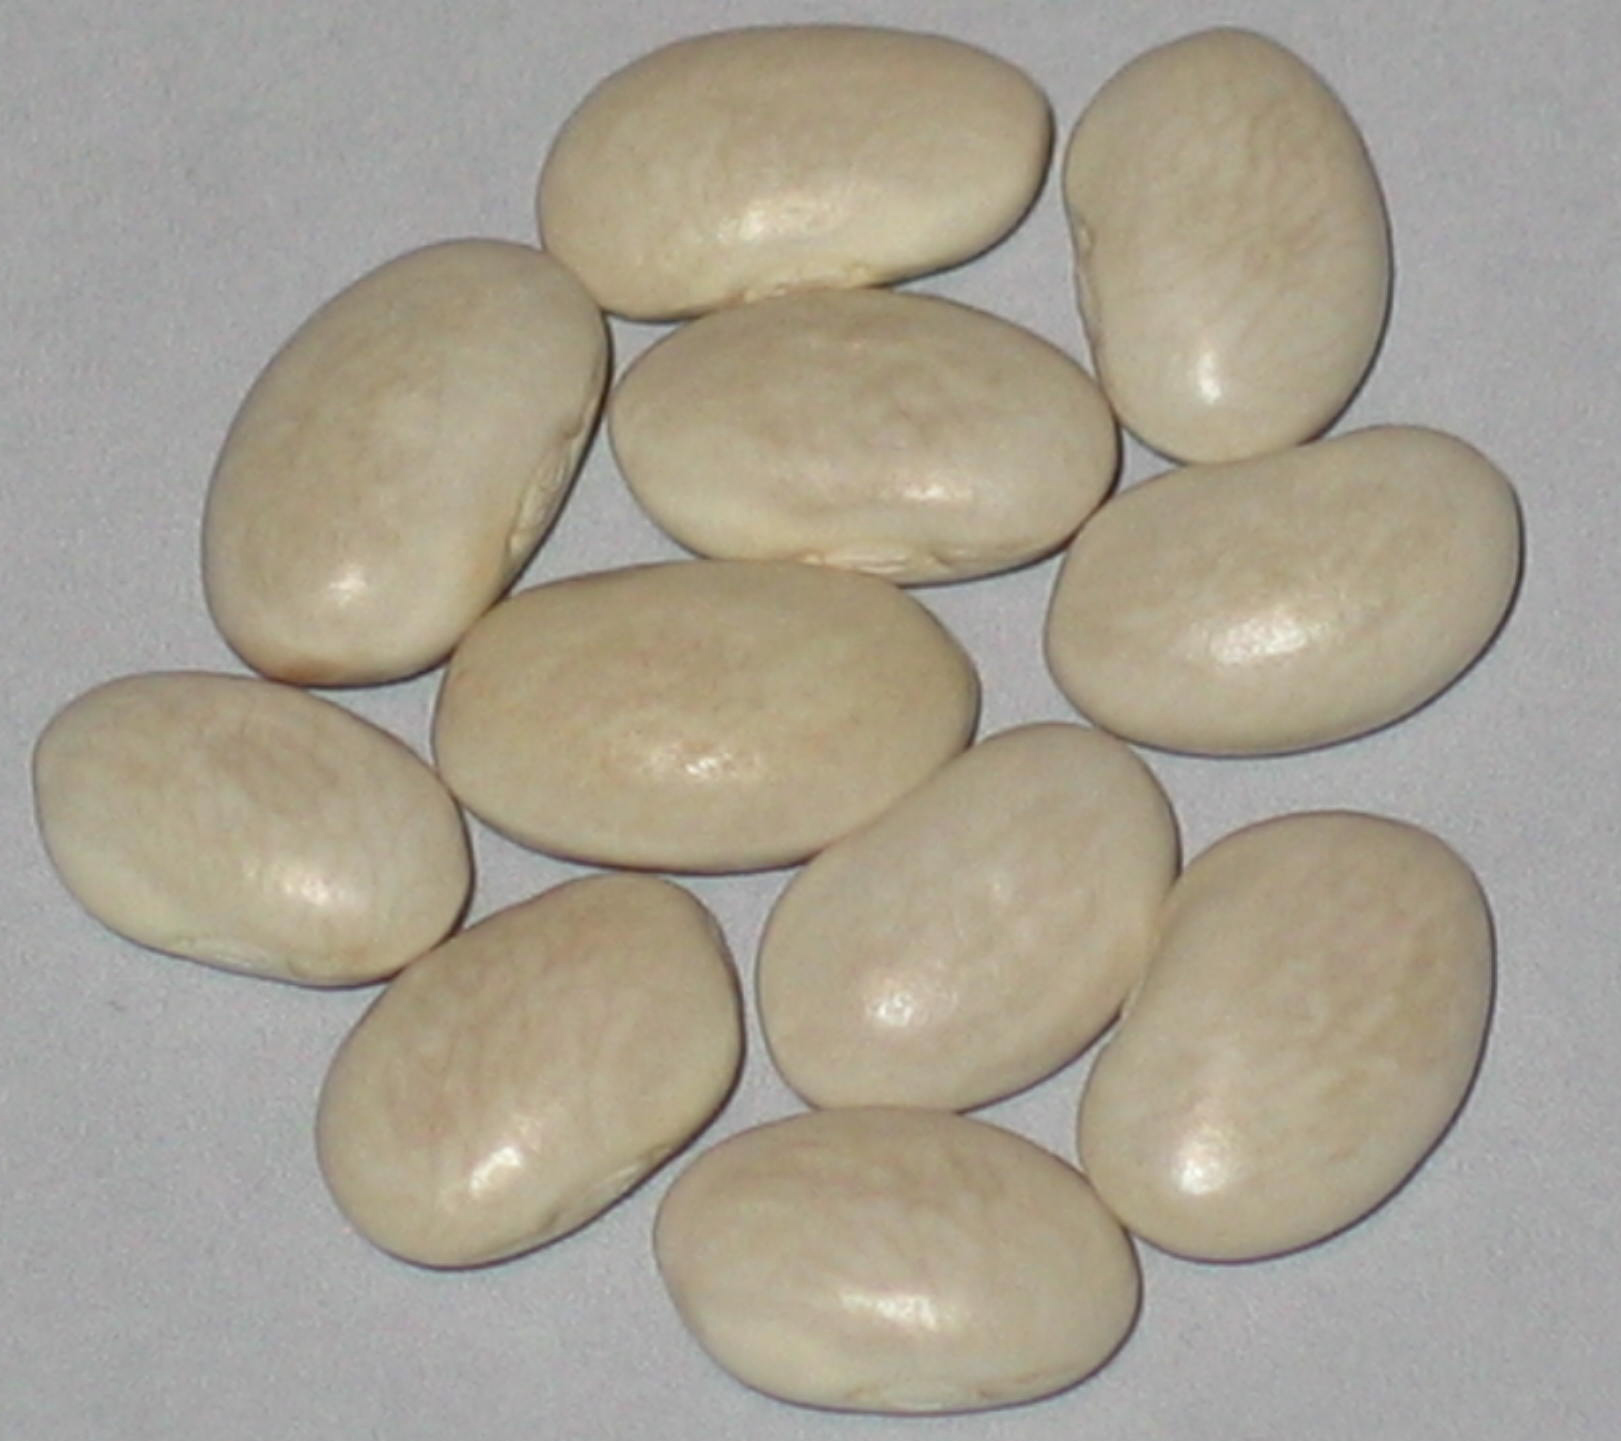 image of Senate Soup Navy beans